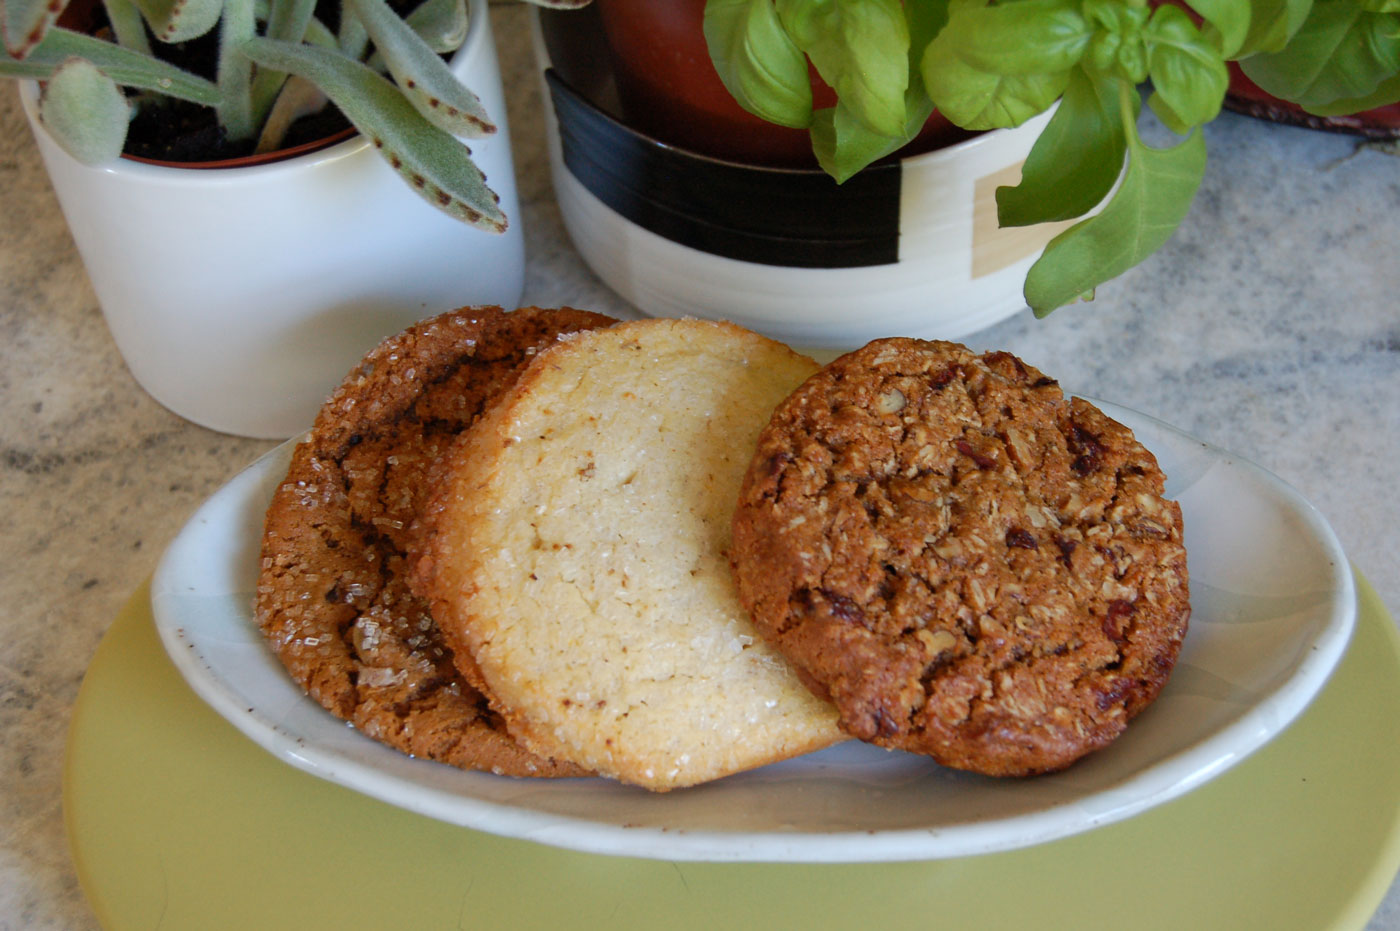 Firebrand Bakery's Ginger, Lemon Lavender and Oatmeal cookies